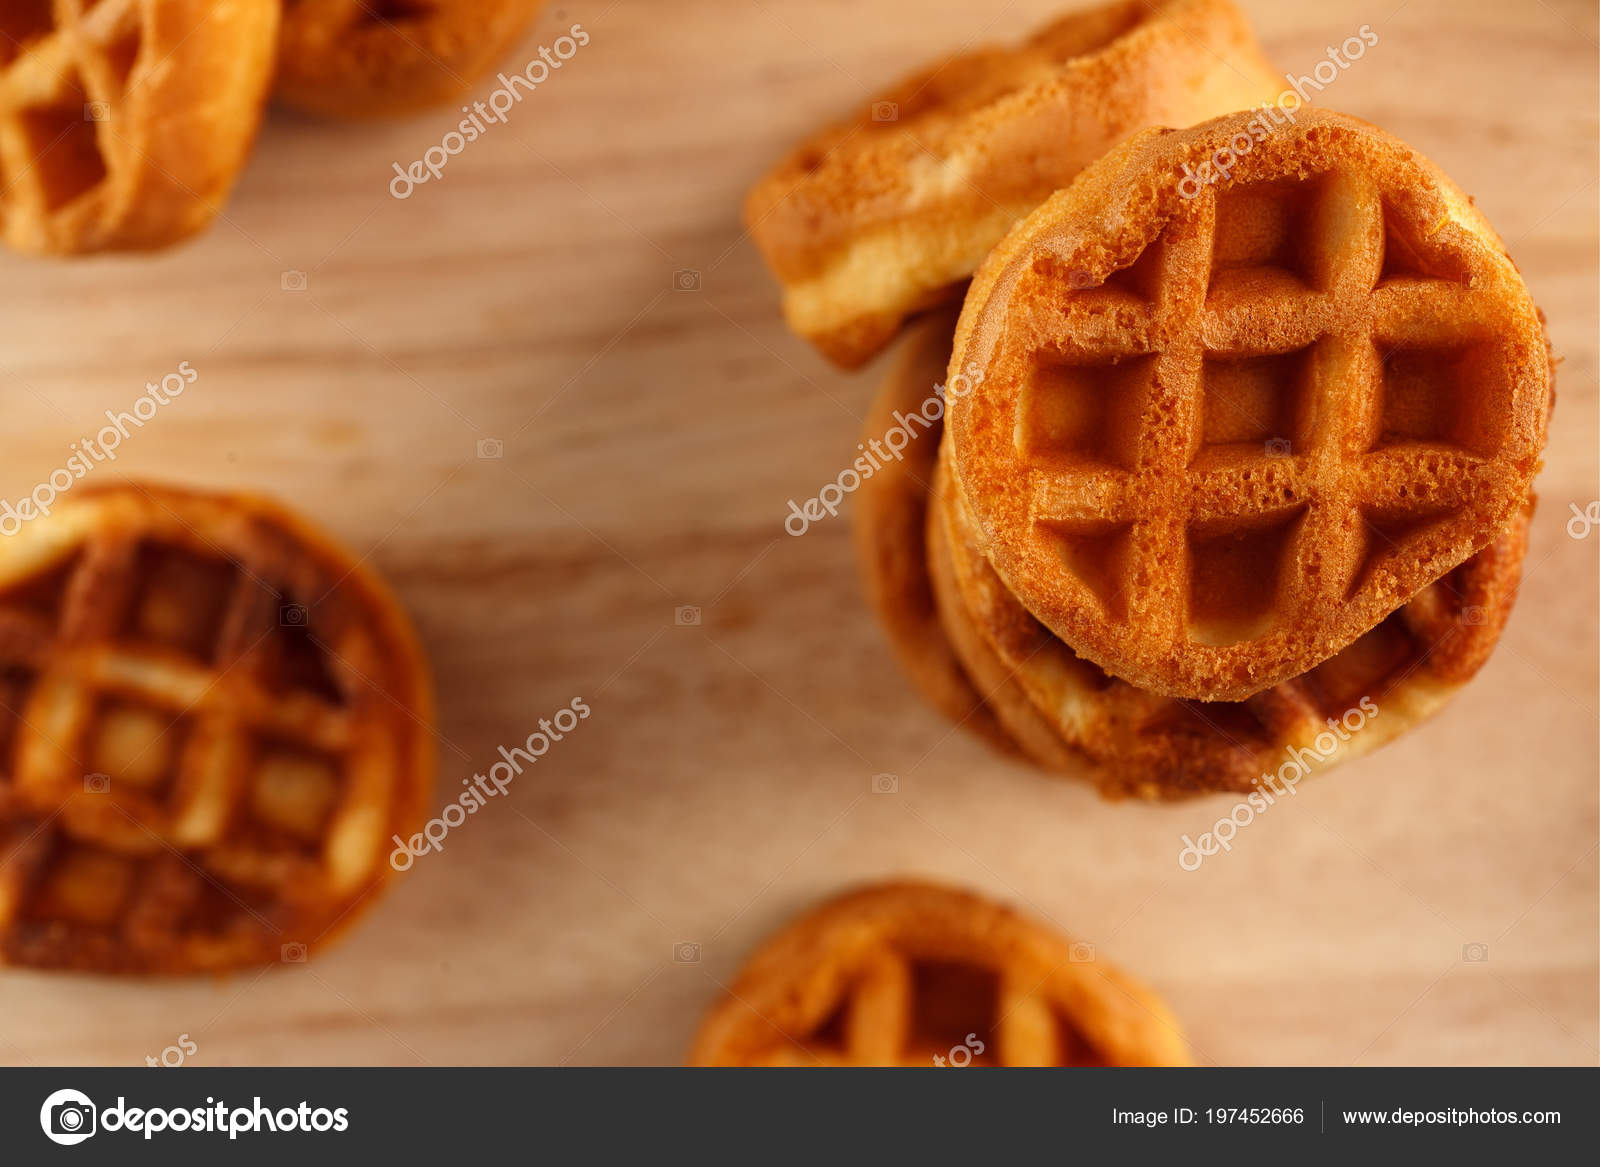 https://st4.depositphotos.com/5306236/19745/i/1600/depositphotos_197452666-stock-photo-circle-mini-waffles-wooden-cutting.jpg